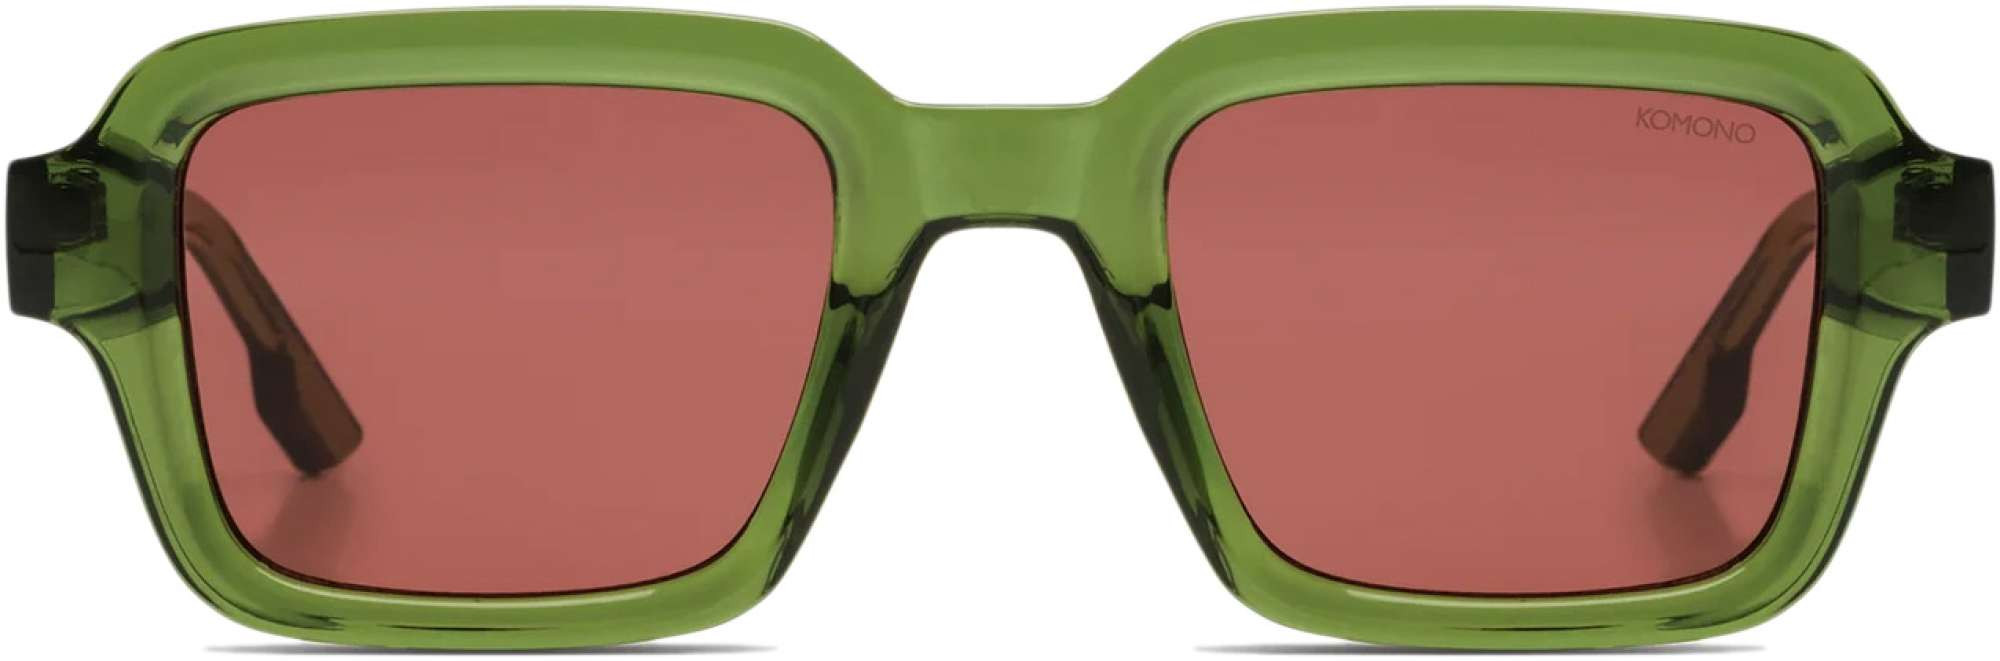 Afbeelding van Komono Lionel sunglasses fern